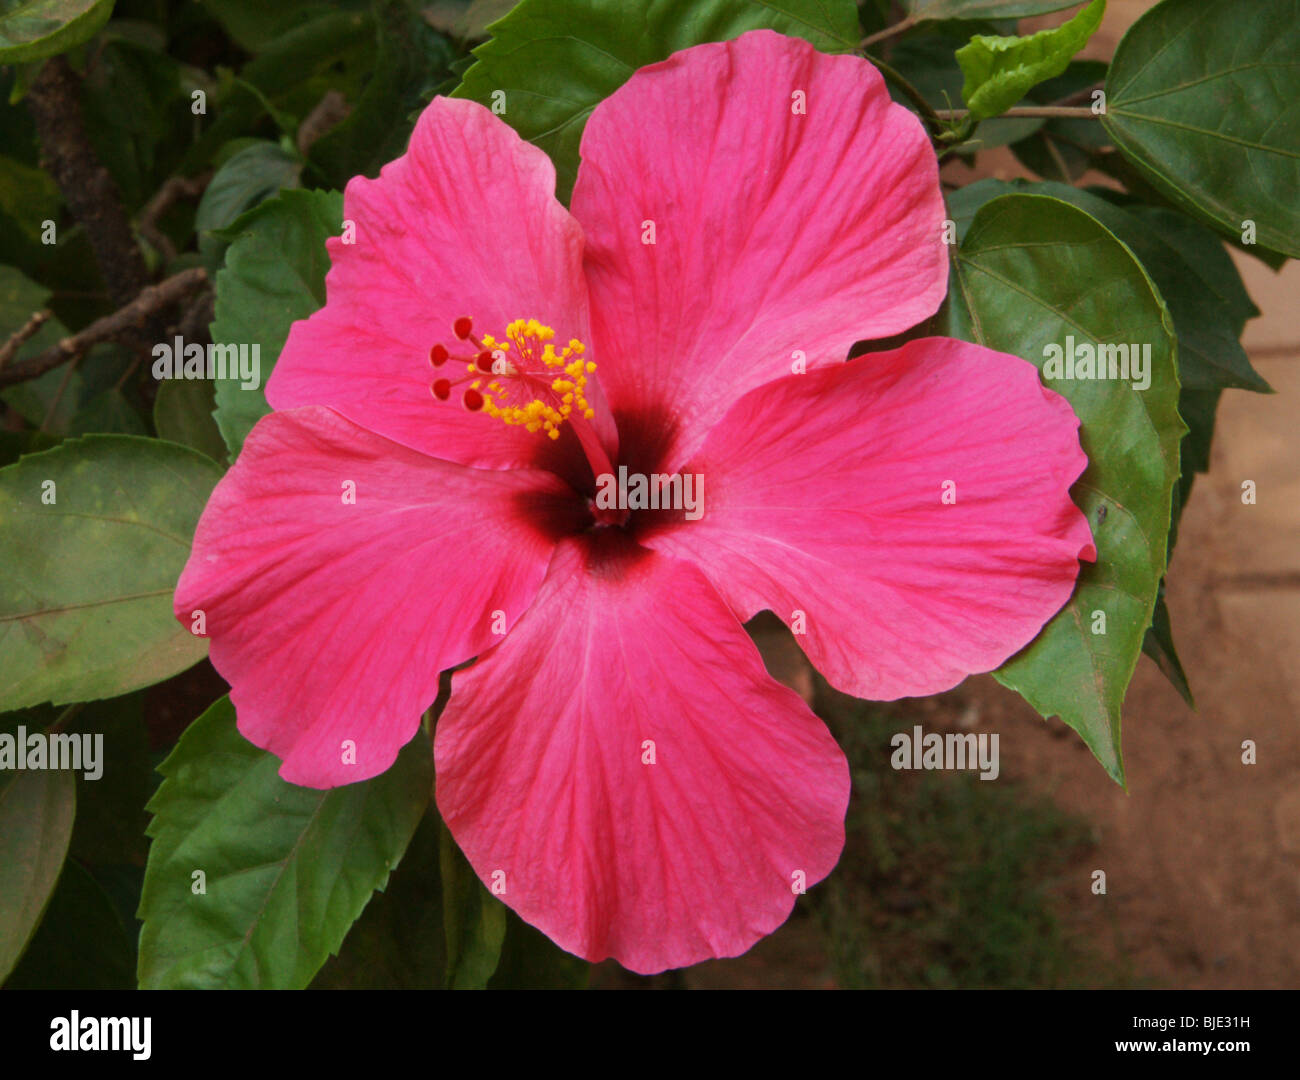 hibiscus, genus of flowering plants in the mallow family, Malvaceae. Stock Photo